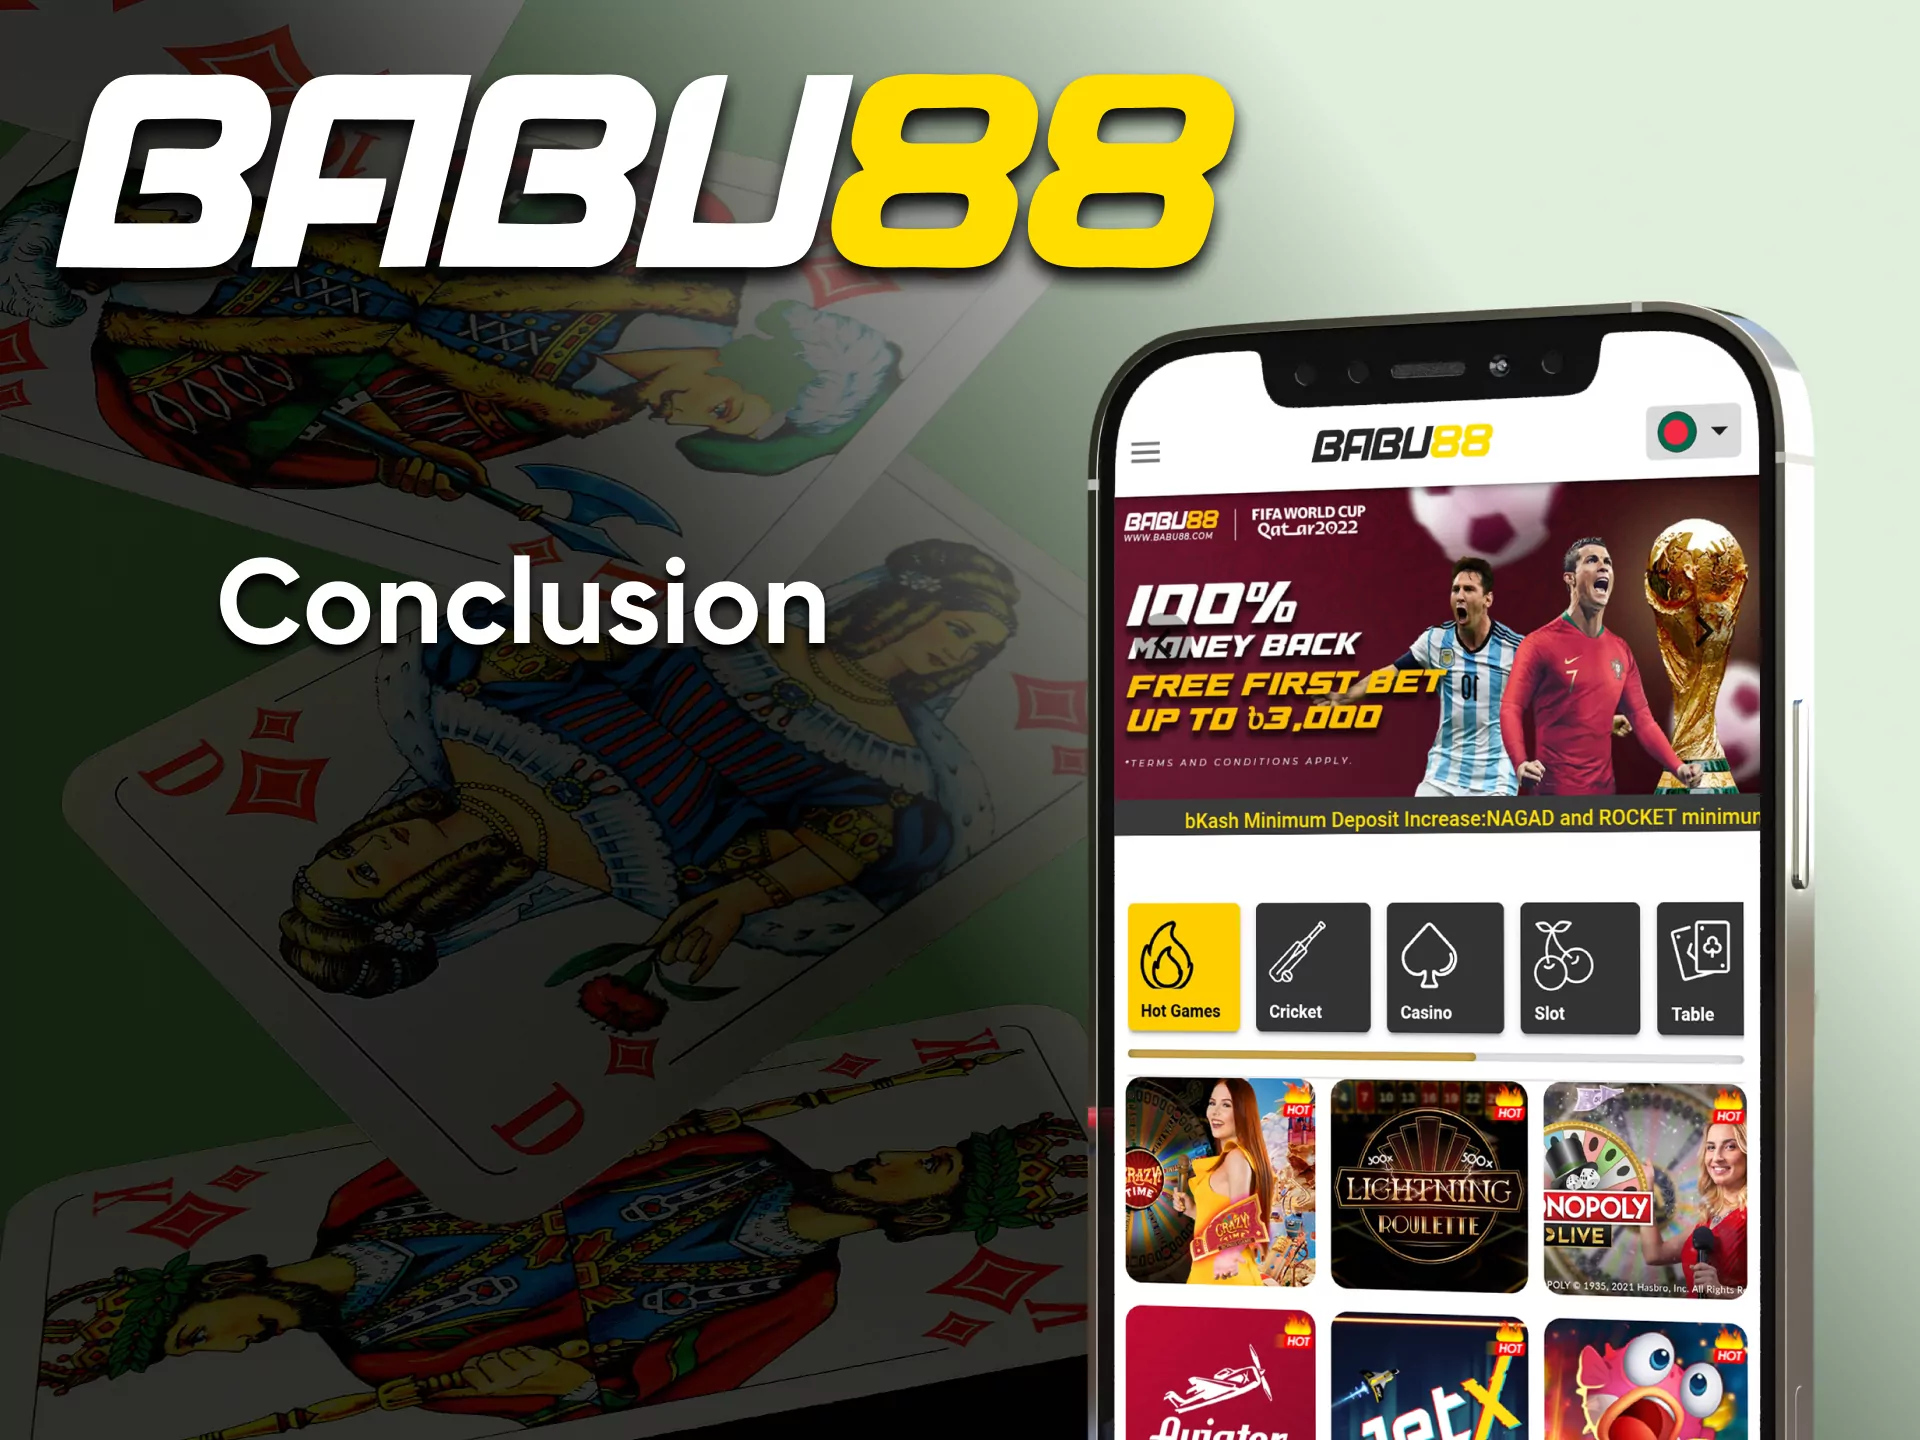 For casino games choose Babu88.